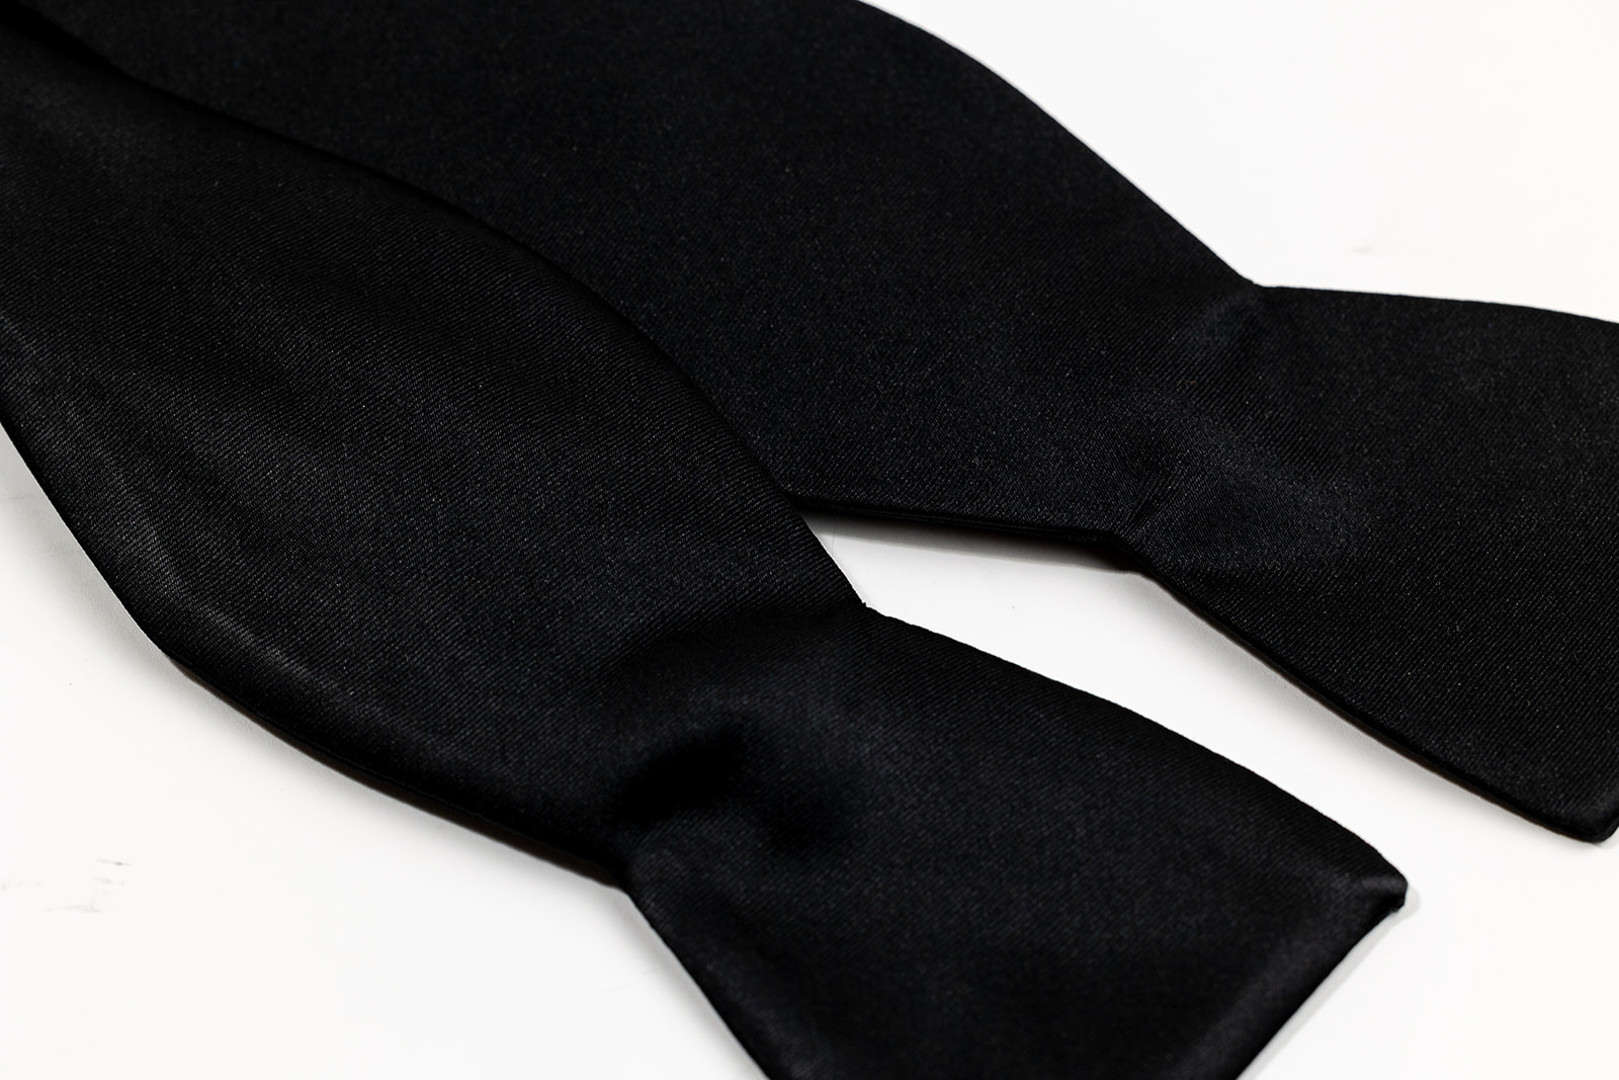 Black Silk Bow Tie